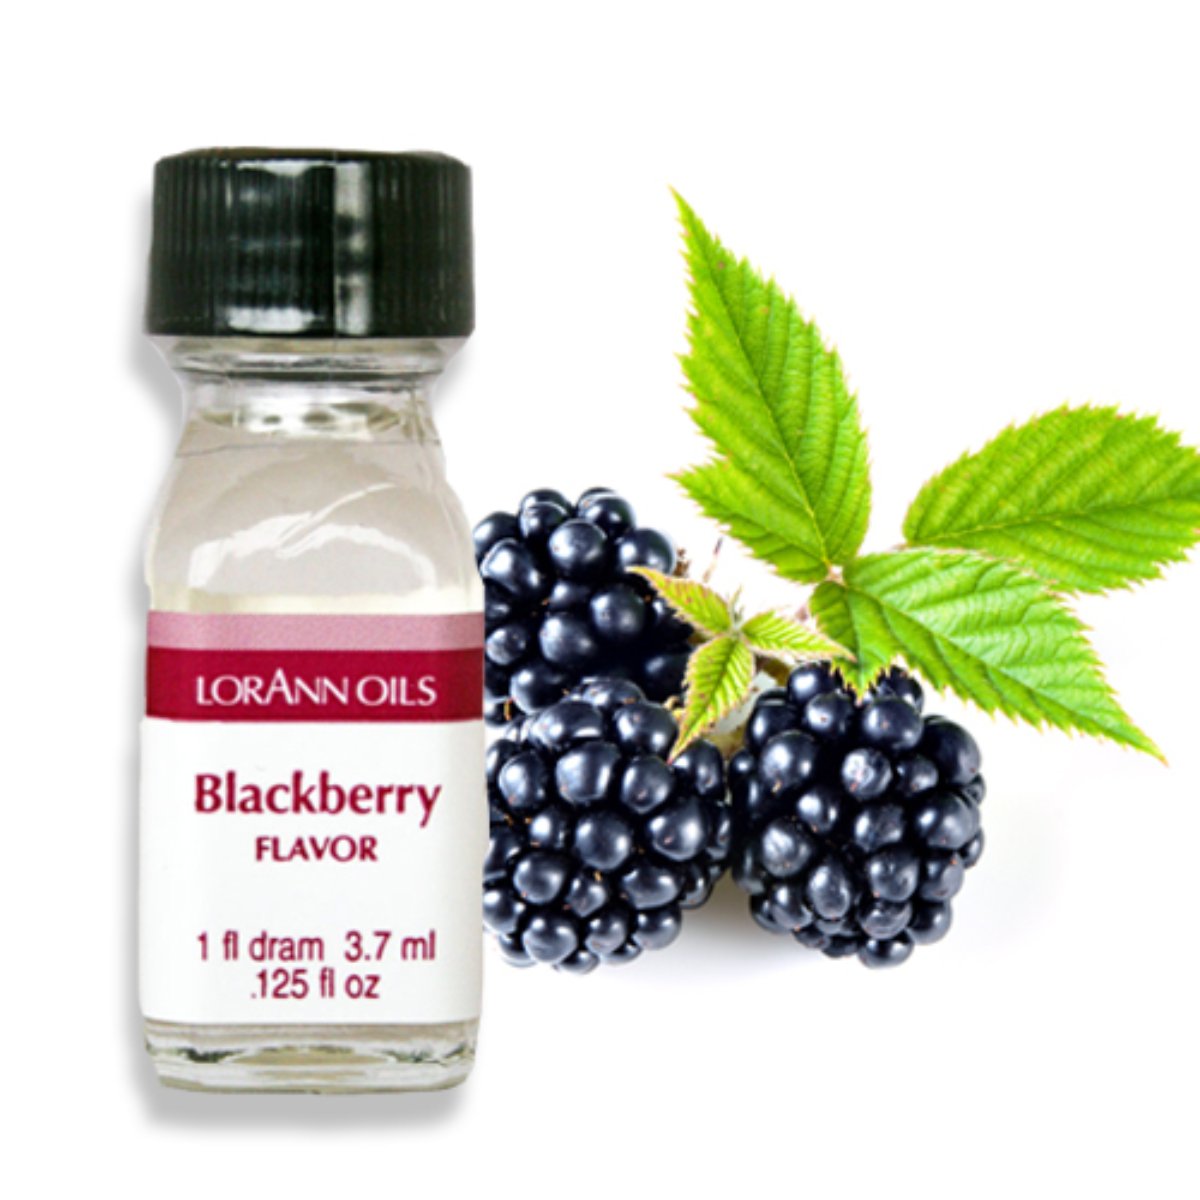 Blackberry Flavor 1 Dram - Bake Supply Plus